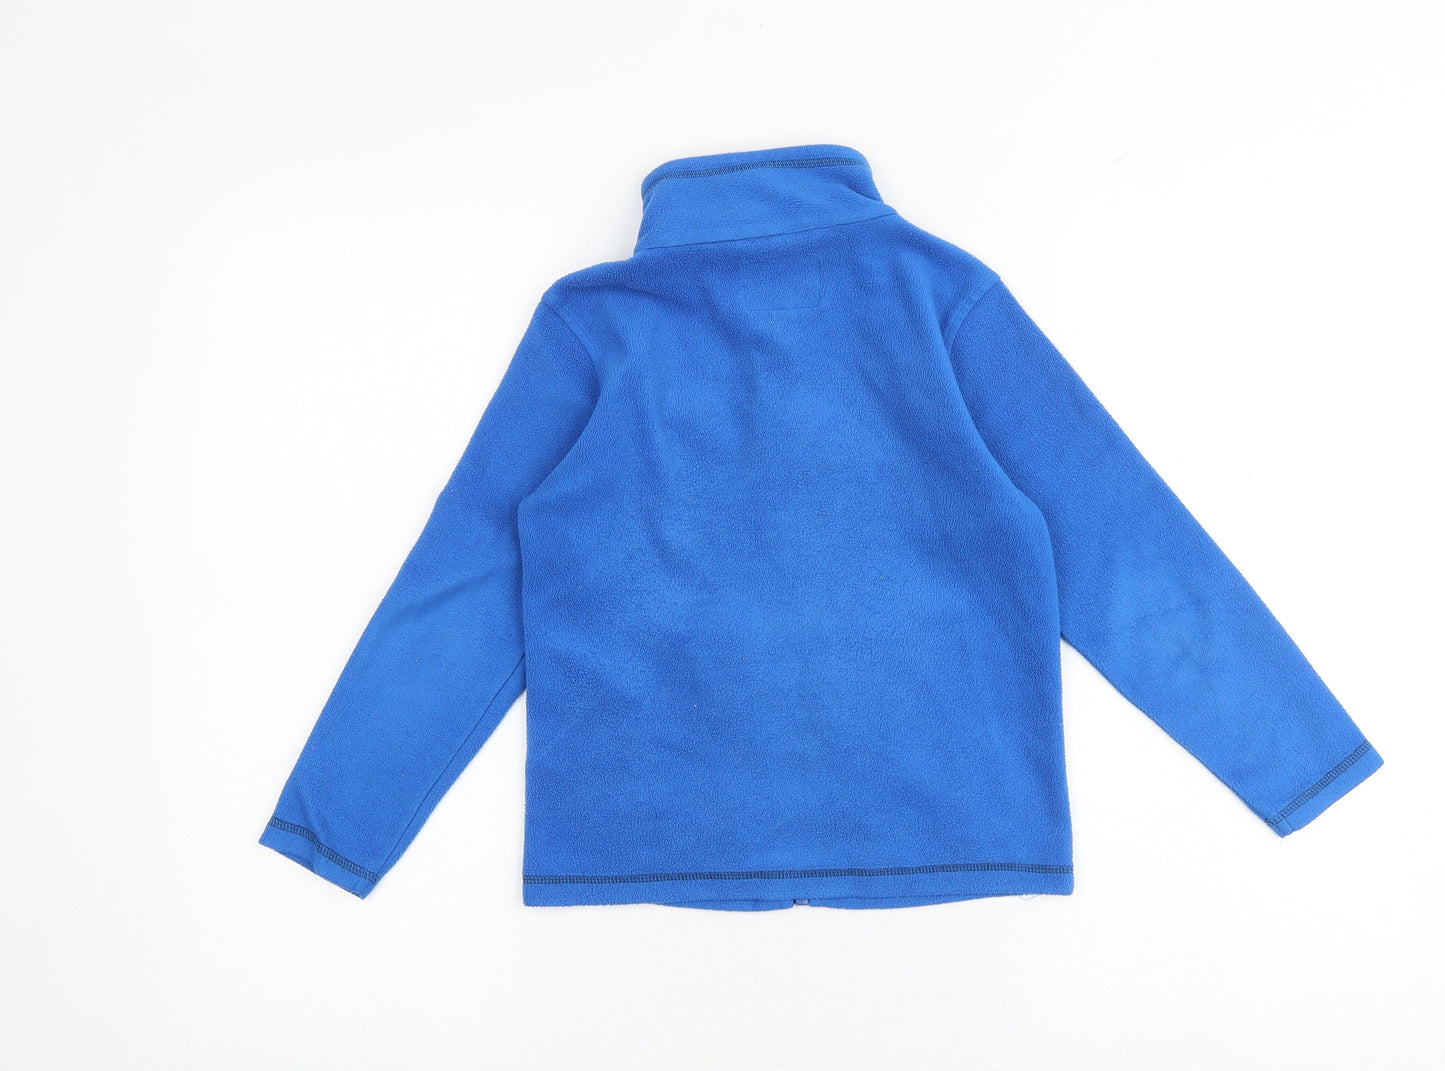 Regatta Boys Blue Jacket Size 7-8 Years Zip